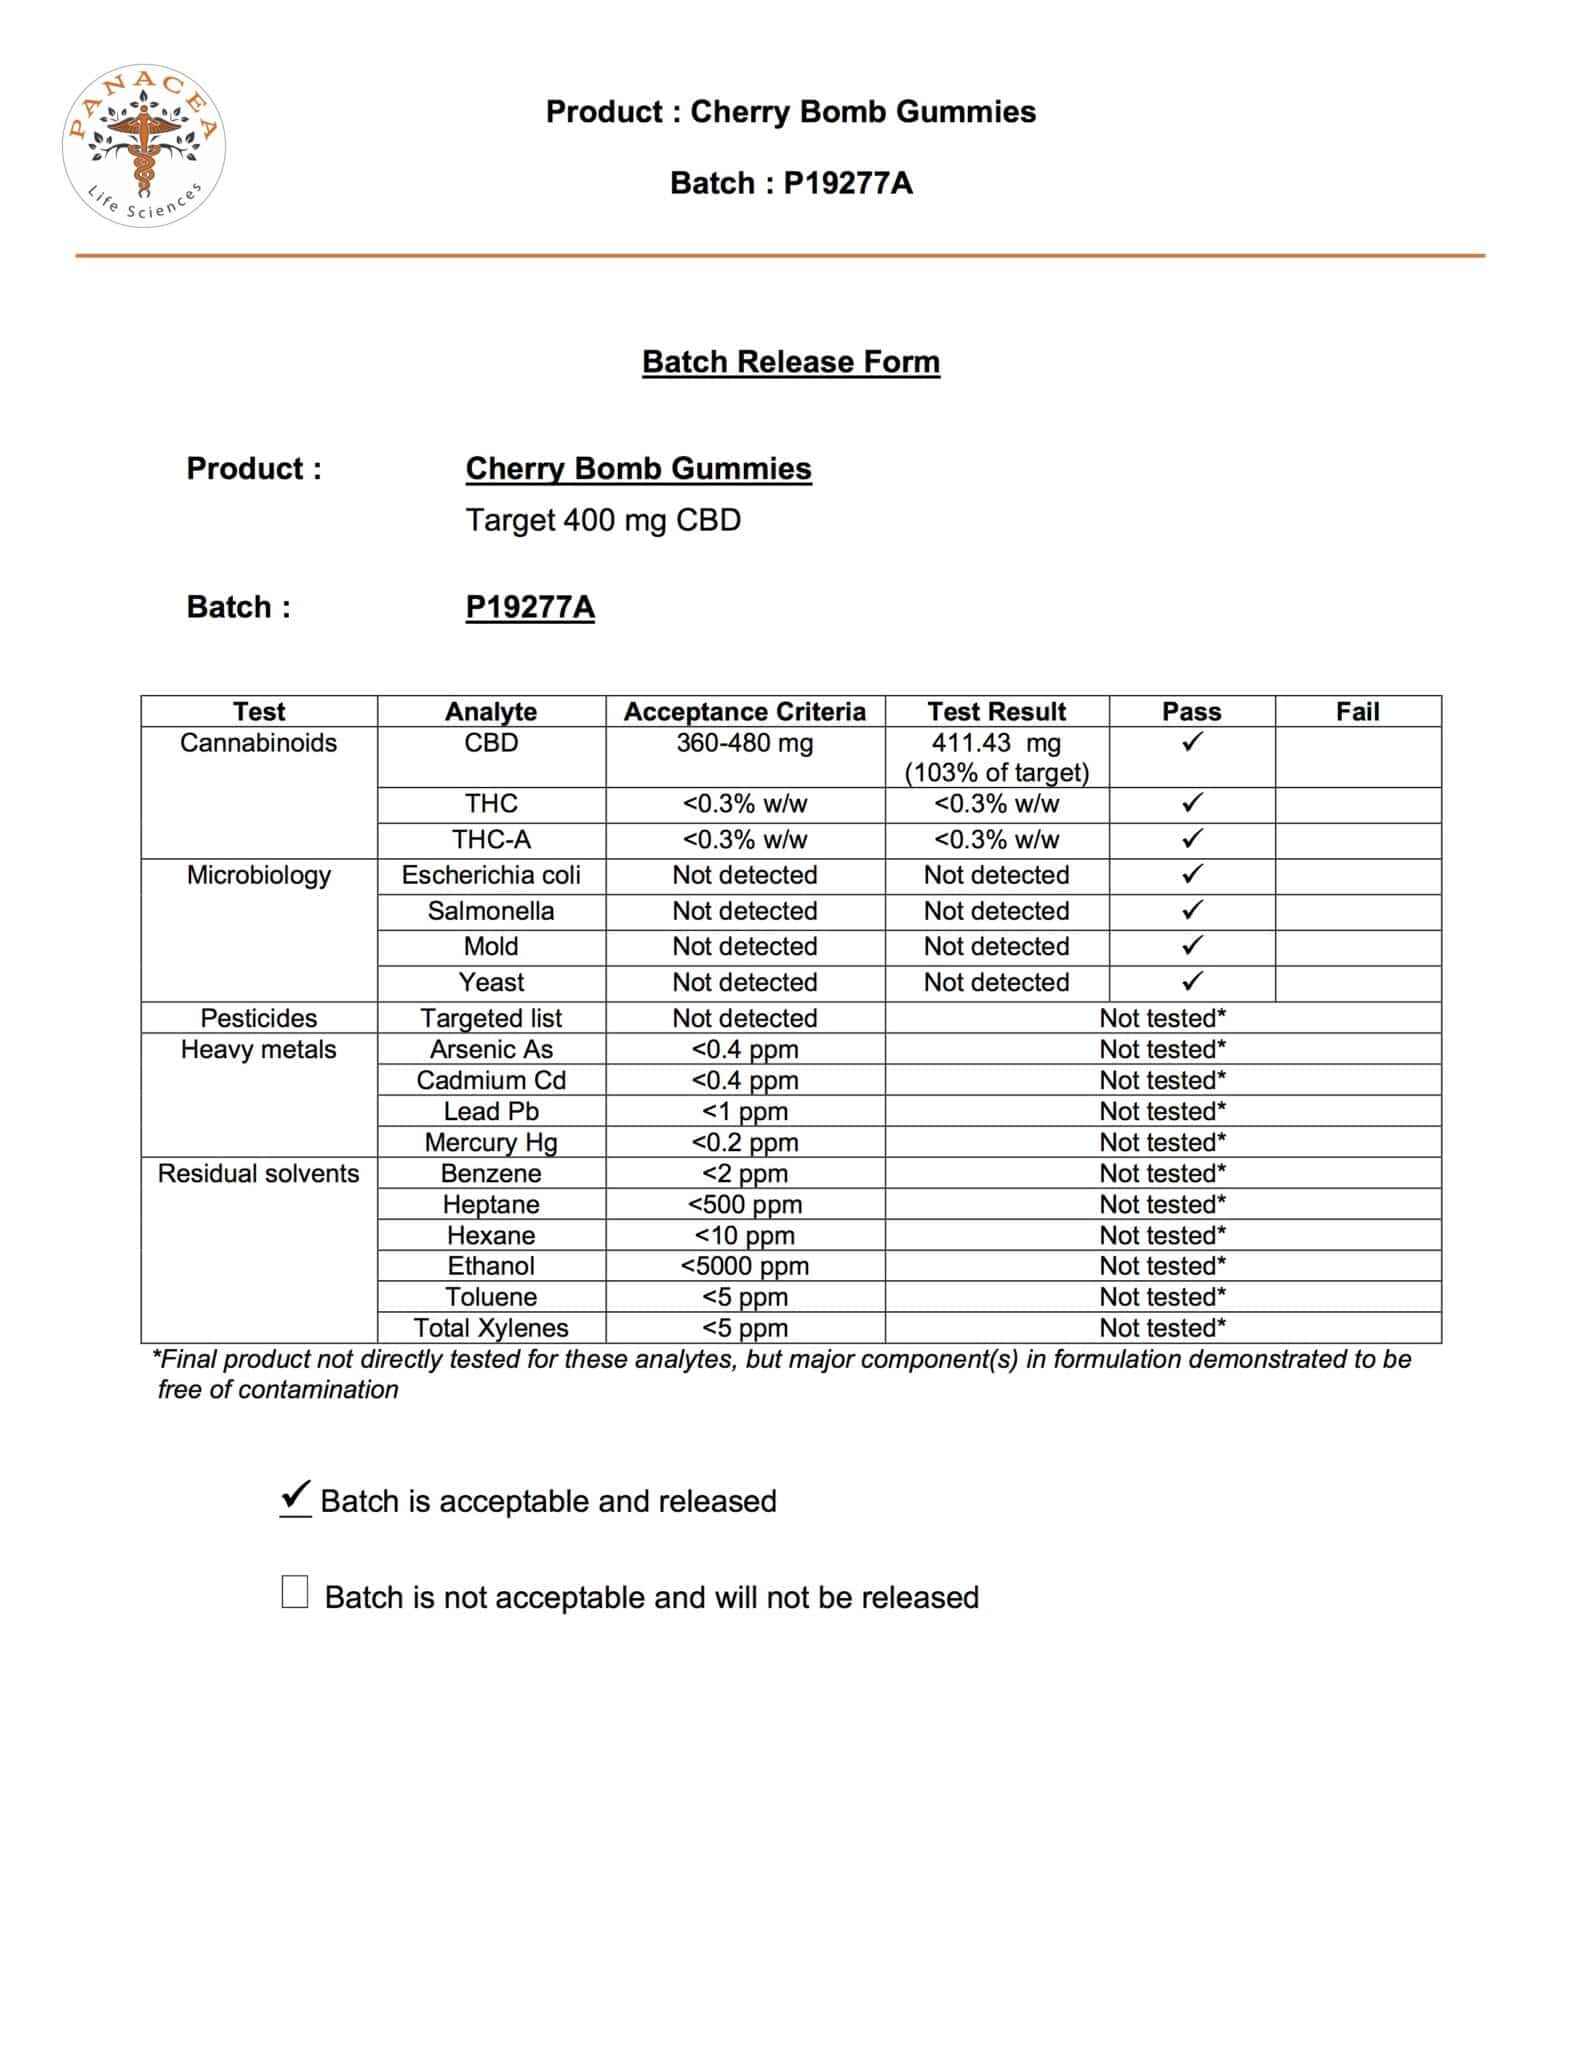 Panacea Test Results - Batch P19277A